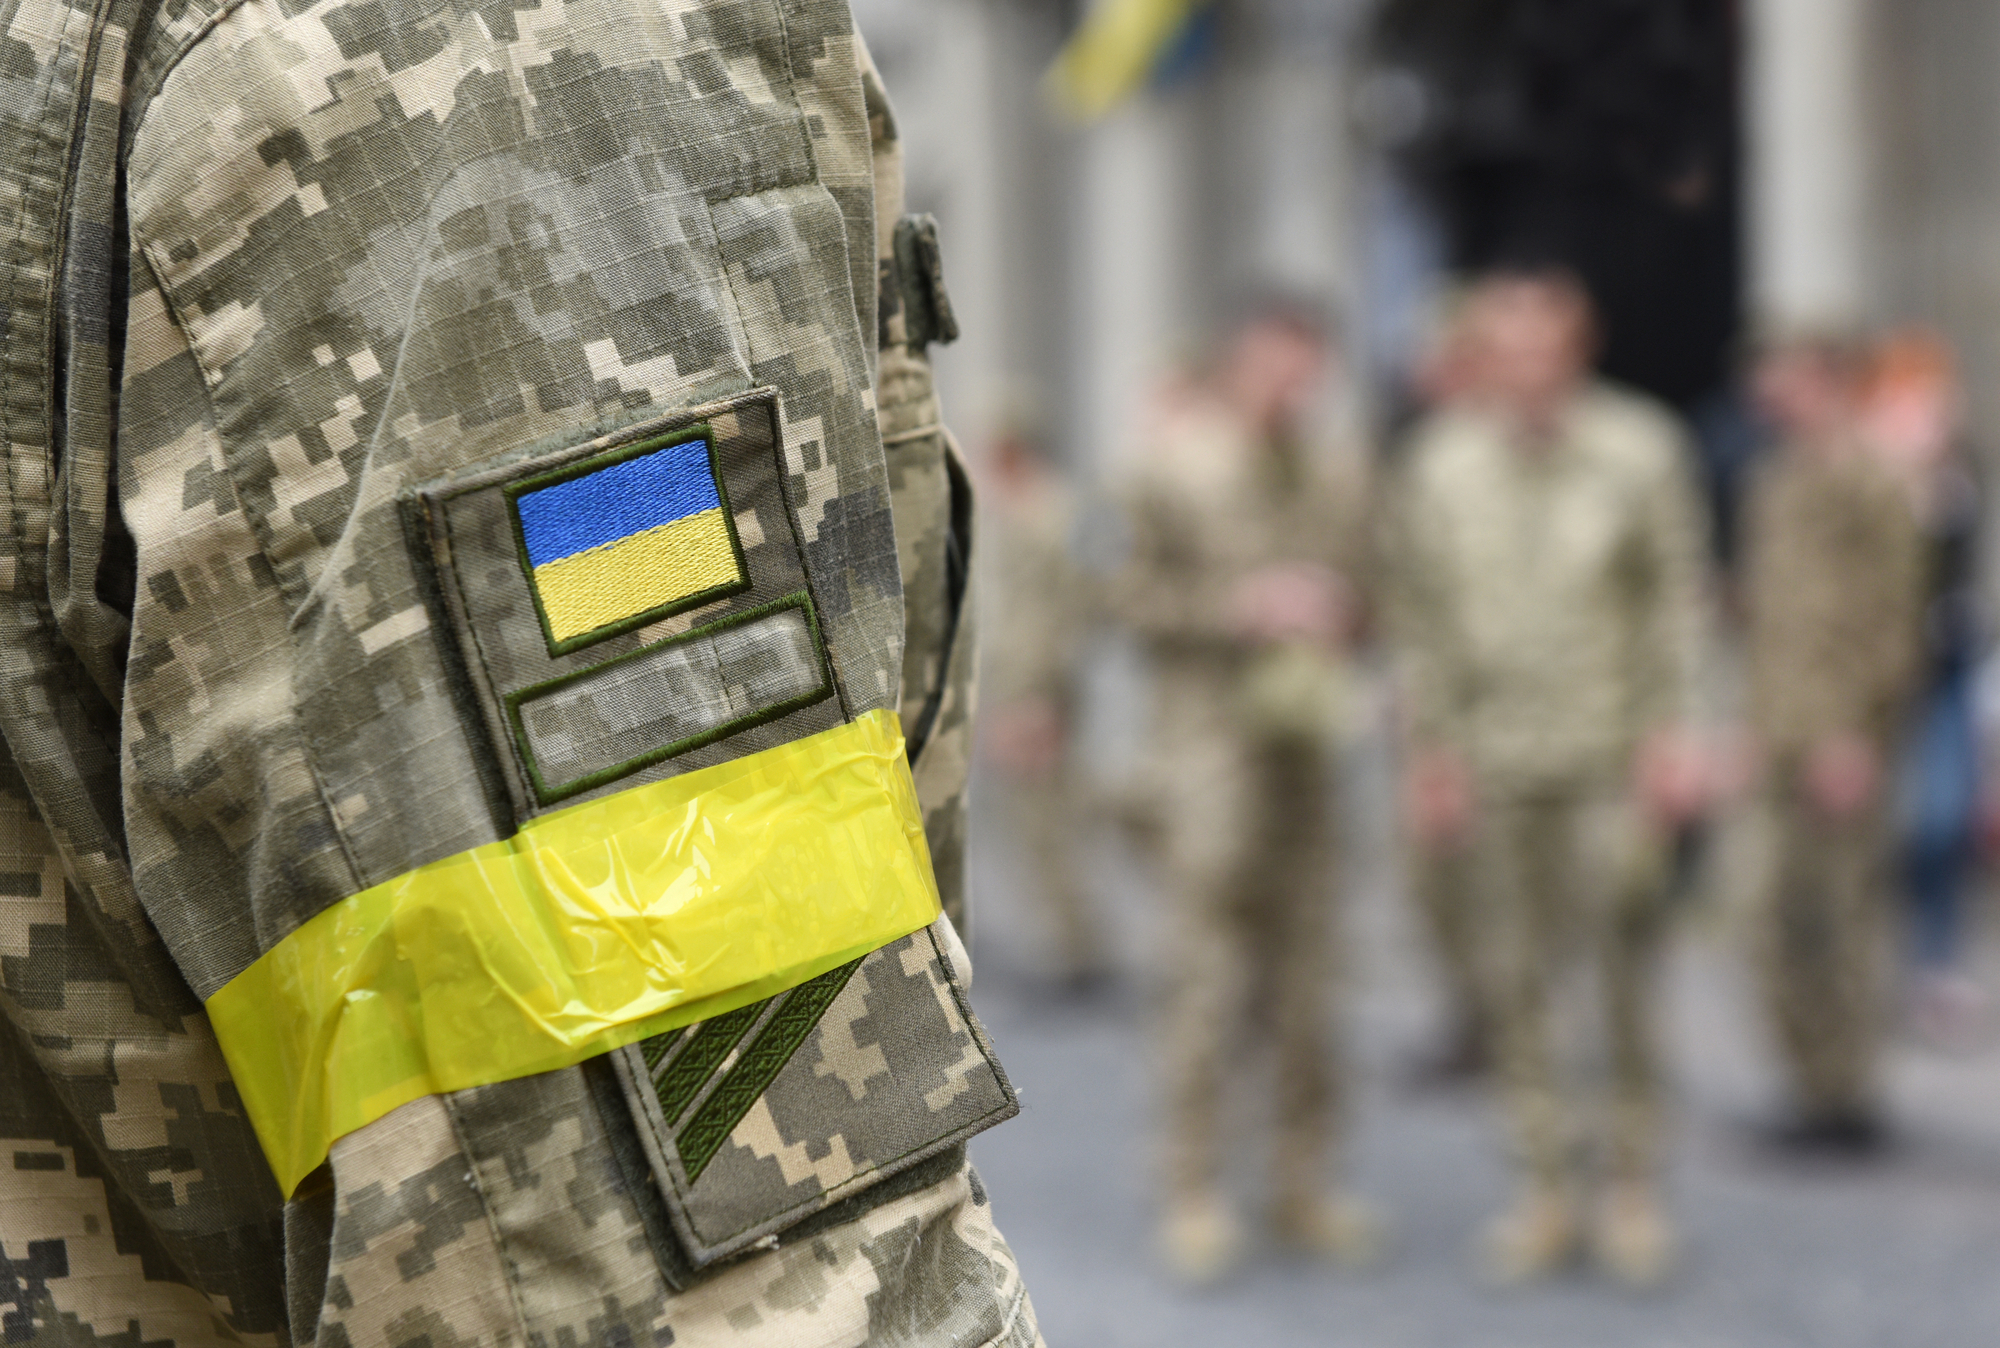 Armed Forces of Ukraine. Ukrainian soldier. Ukrainian army. Ukrainian flag on military uniform.